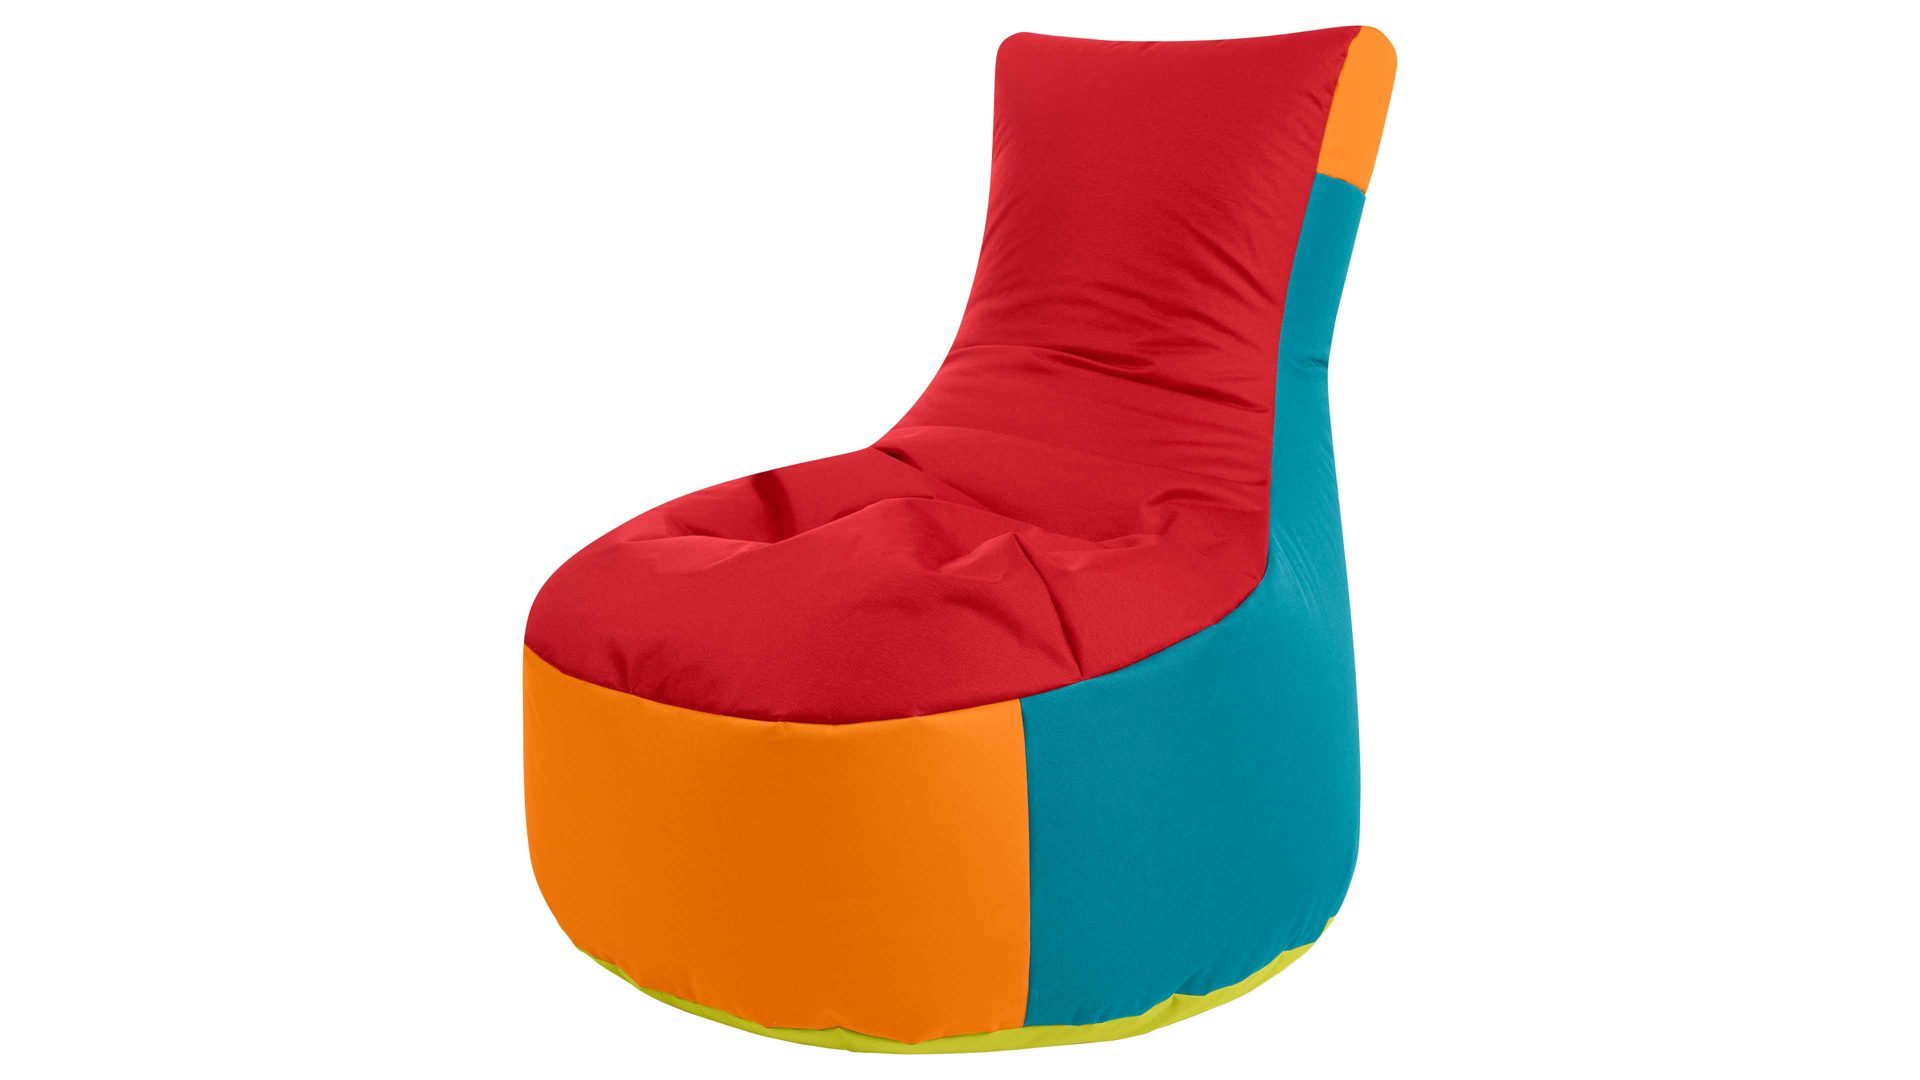 Sitzsack-Sessel Magma sitting point aus Kunstfaser in Mehrfarbig SITTING POINT Sitzsack-Sessel swing harlekin brava® bunte Kunstfaser - ca. 300 Liter